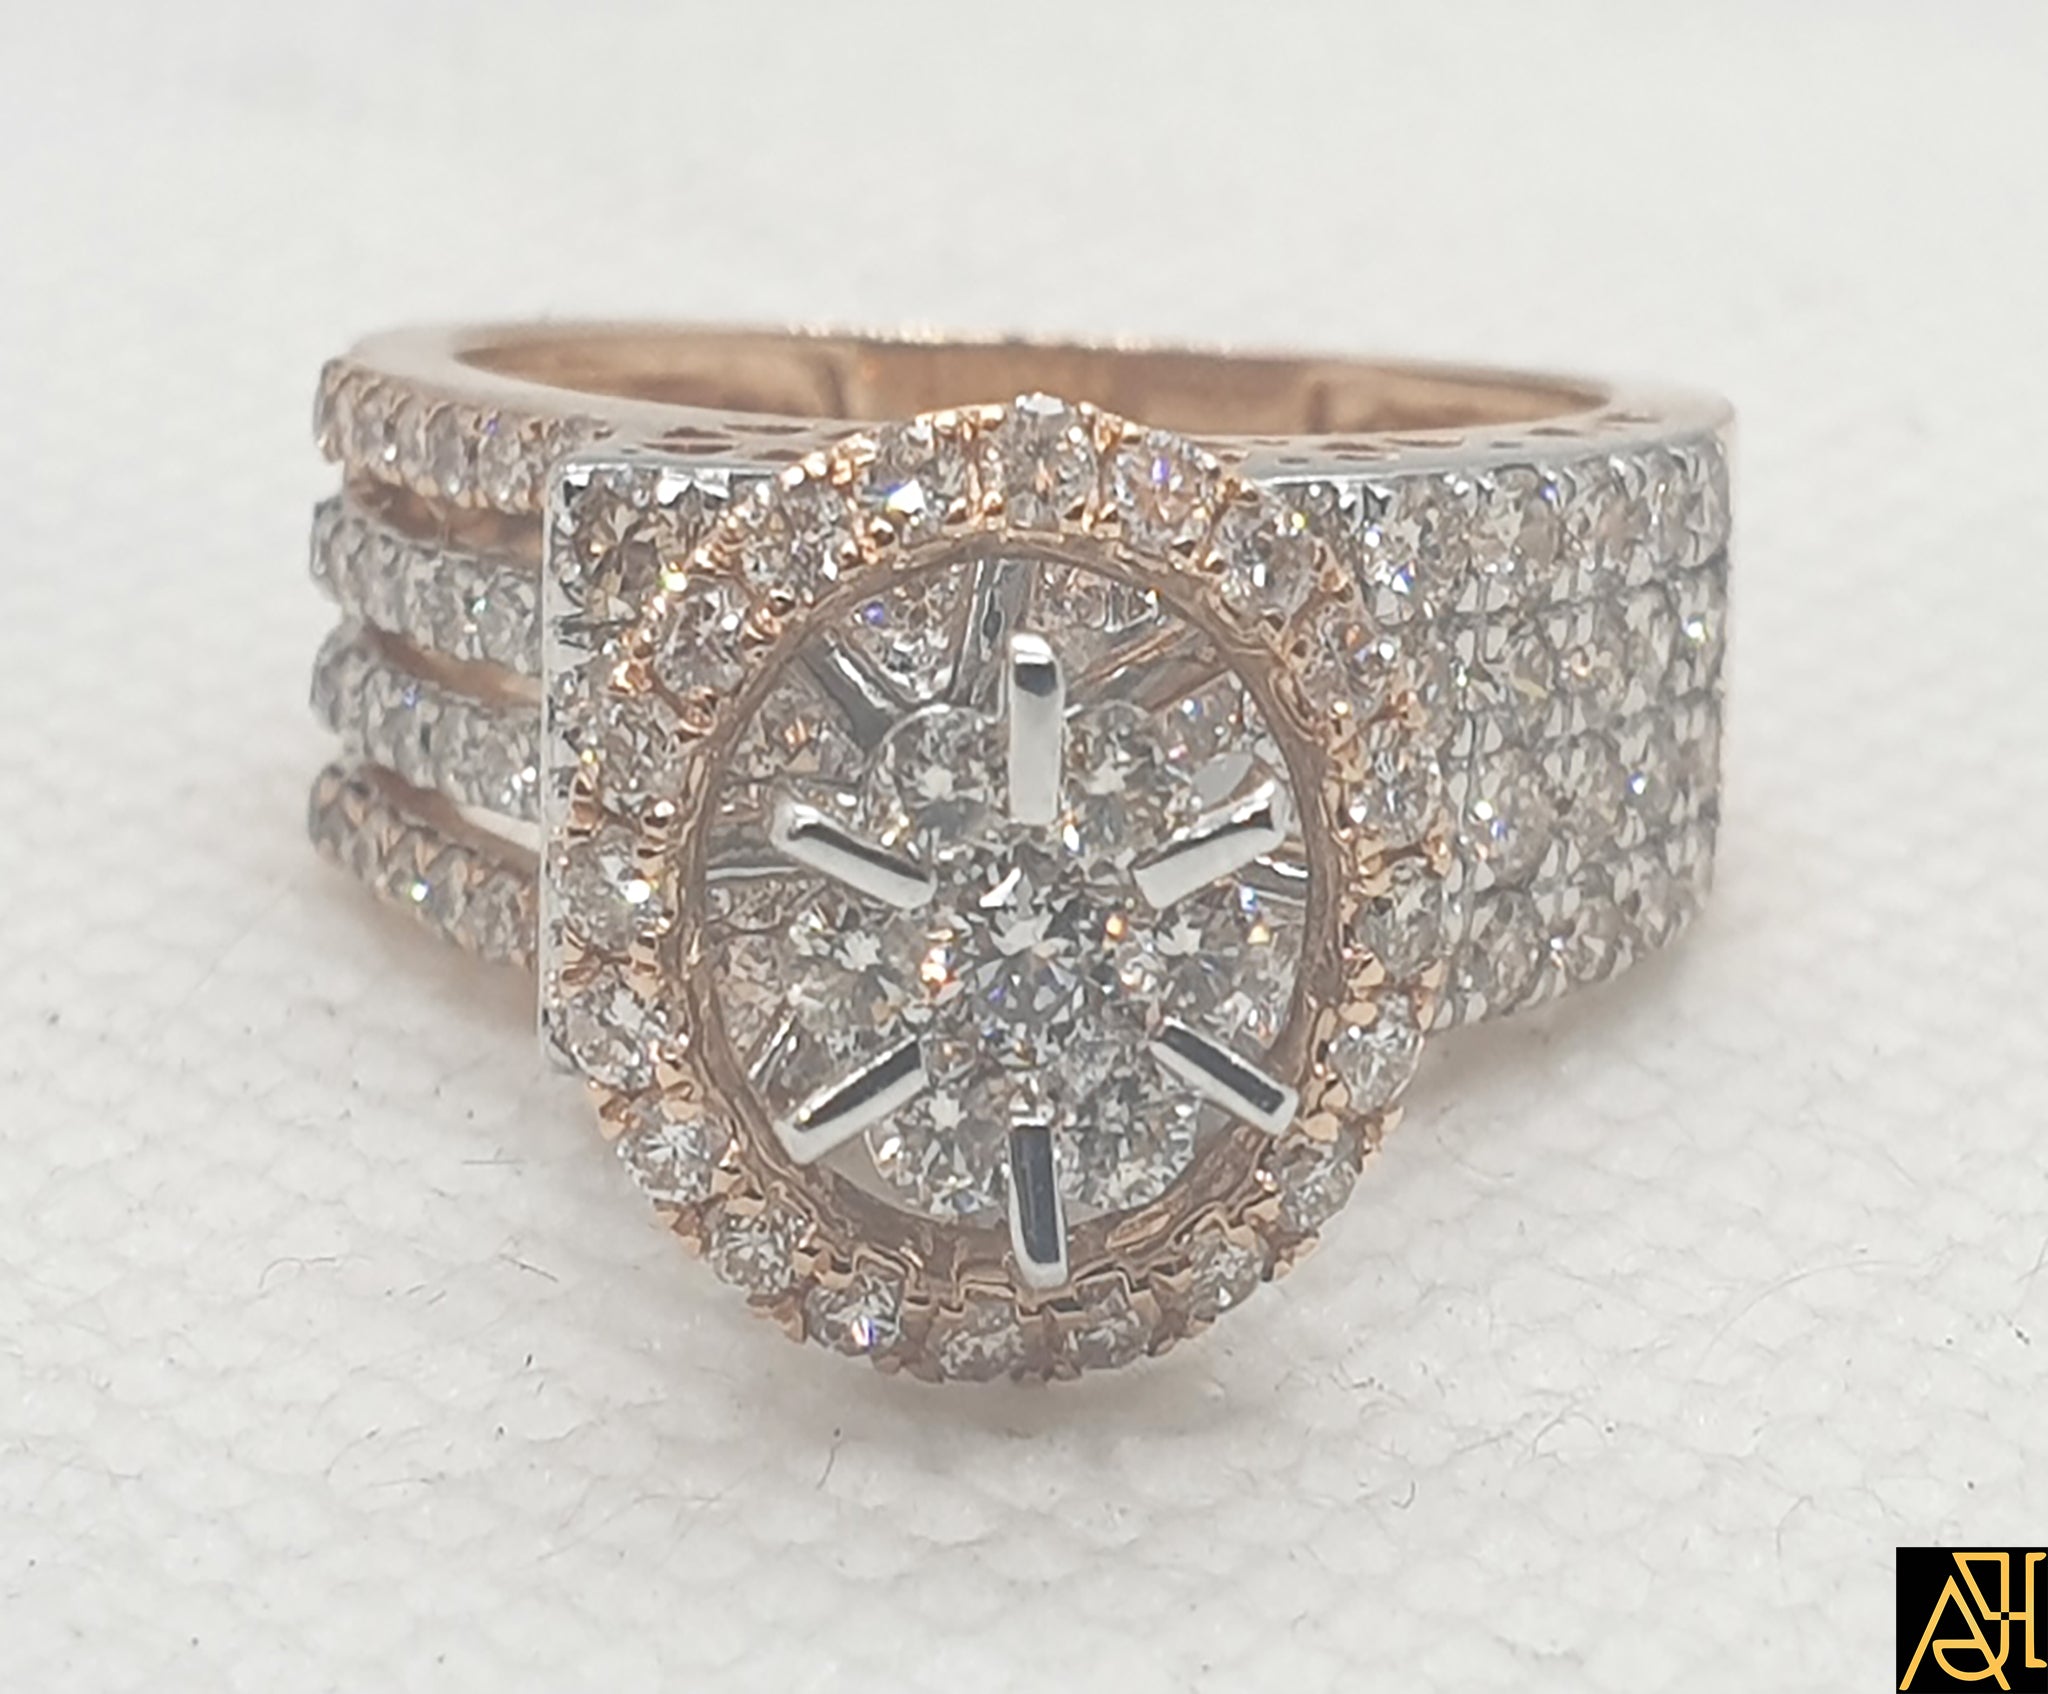 Diamond Rings, Engagement Rings, Wedding Rings. Premier Destination for  Diamond Jewelry Shopping | Adori Millennium